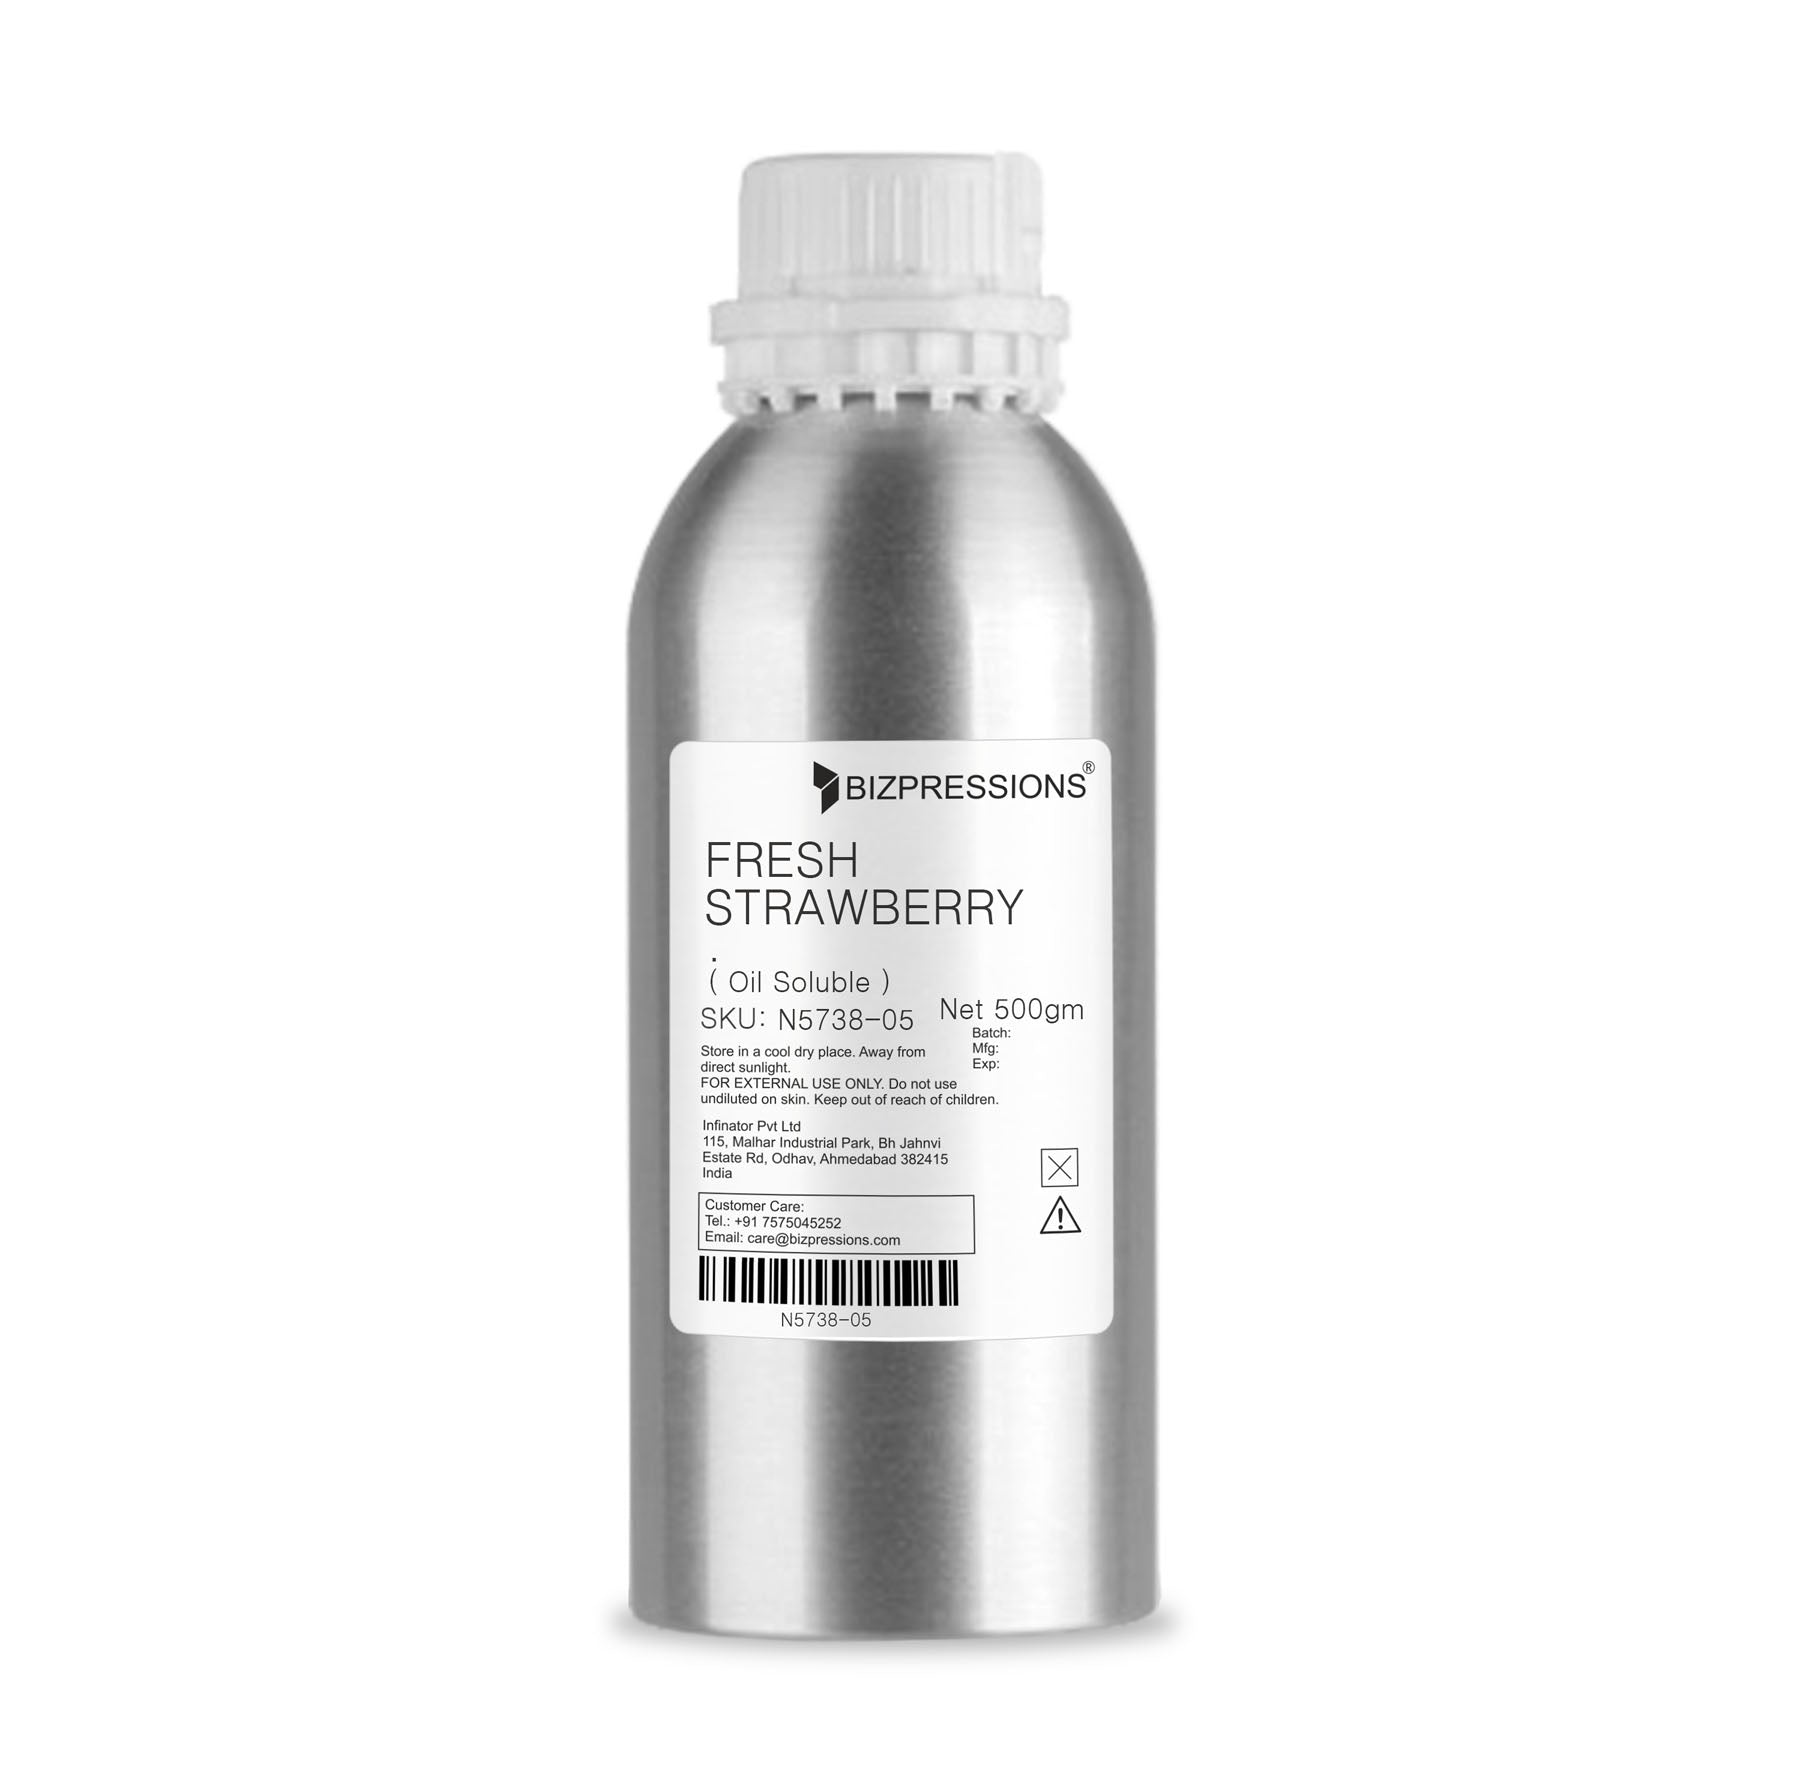 FRESH STRAWBERRY - Fragrance ( Oil Soluble ) - 500 gm